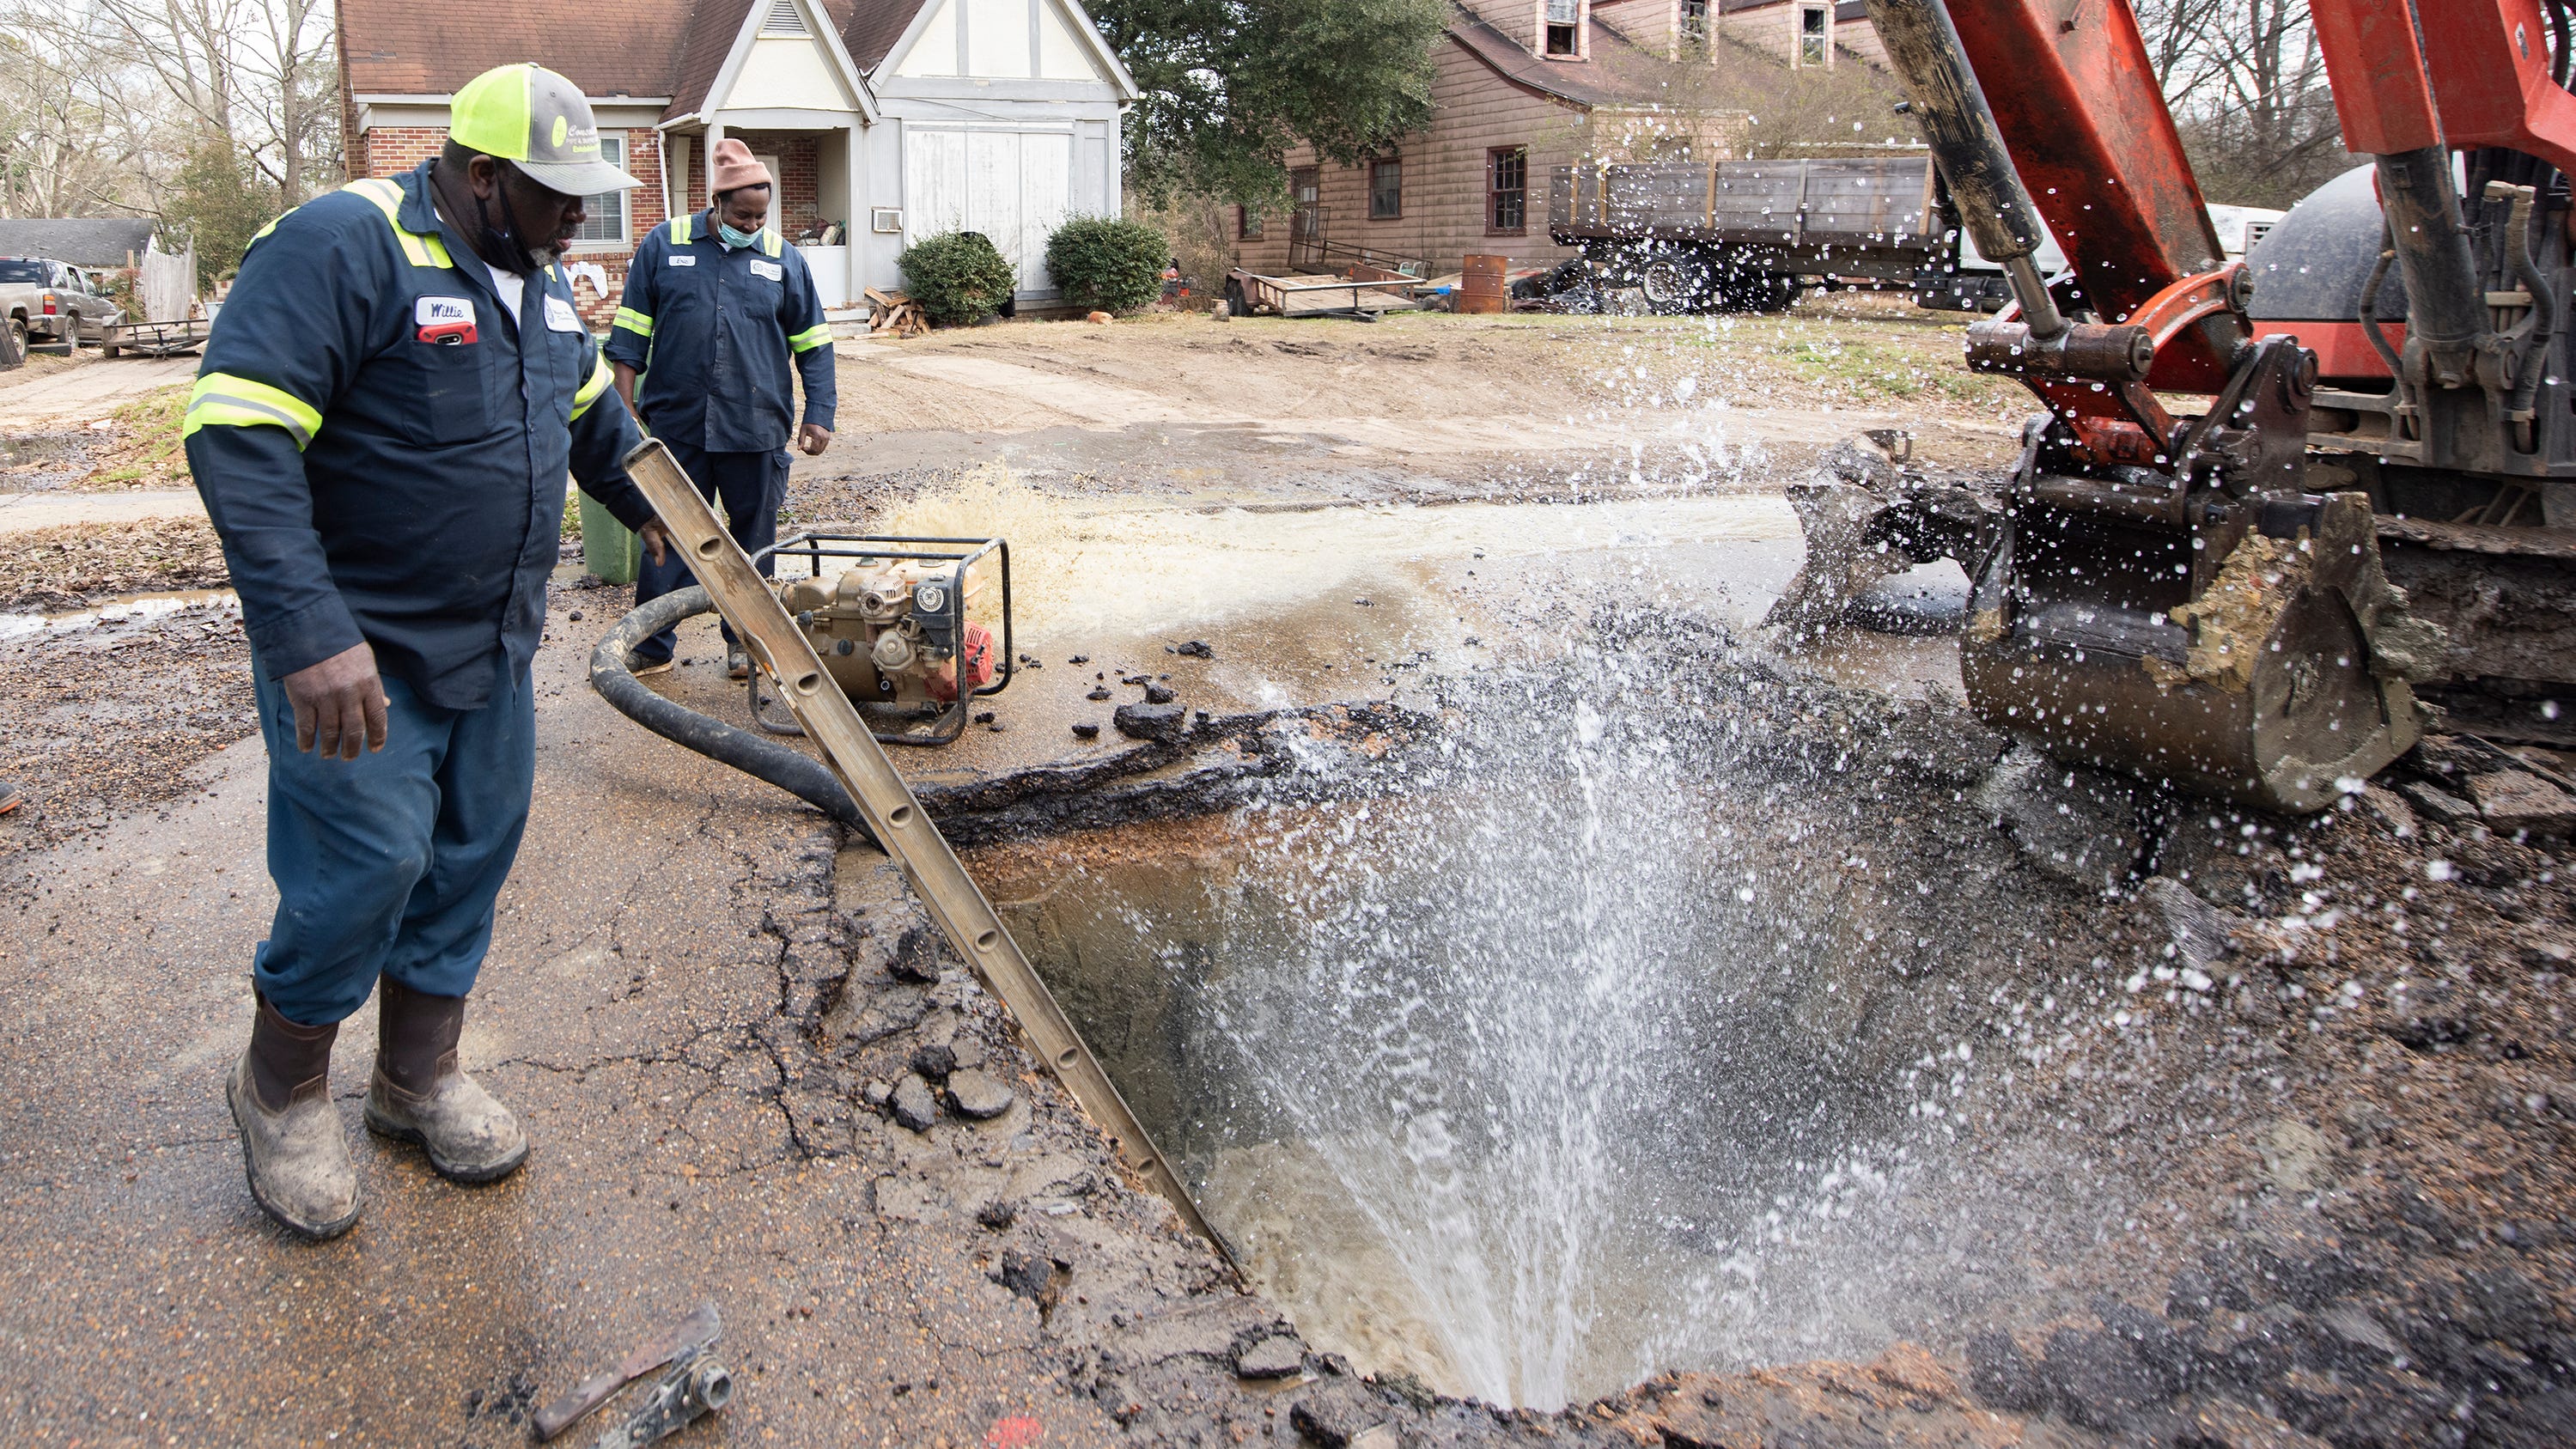 Jackson water crisis: Crews still working to restore pressure, fix water main breaks - Clarion Ledger